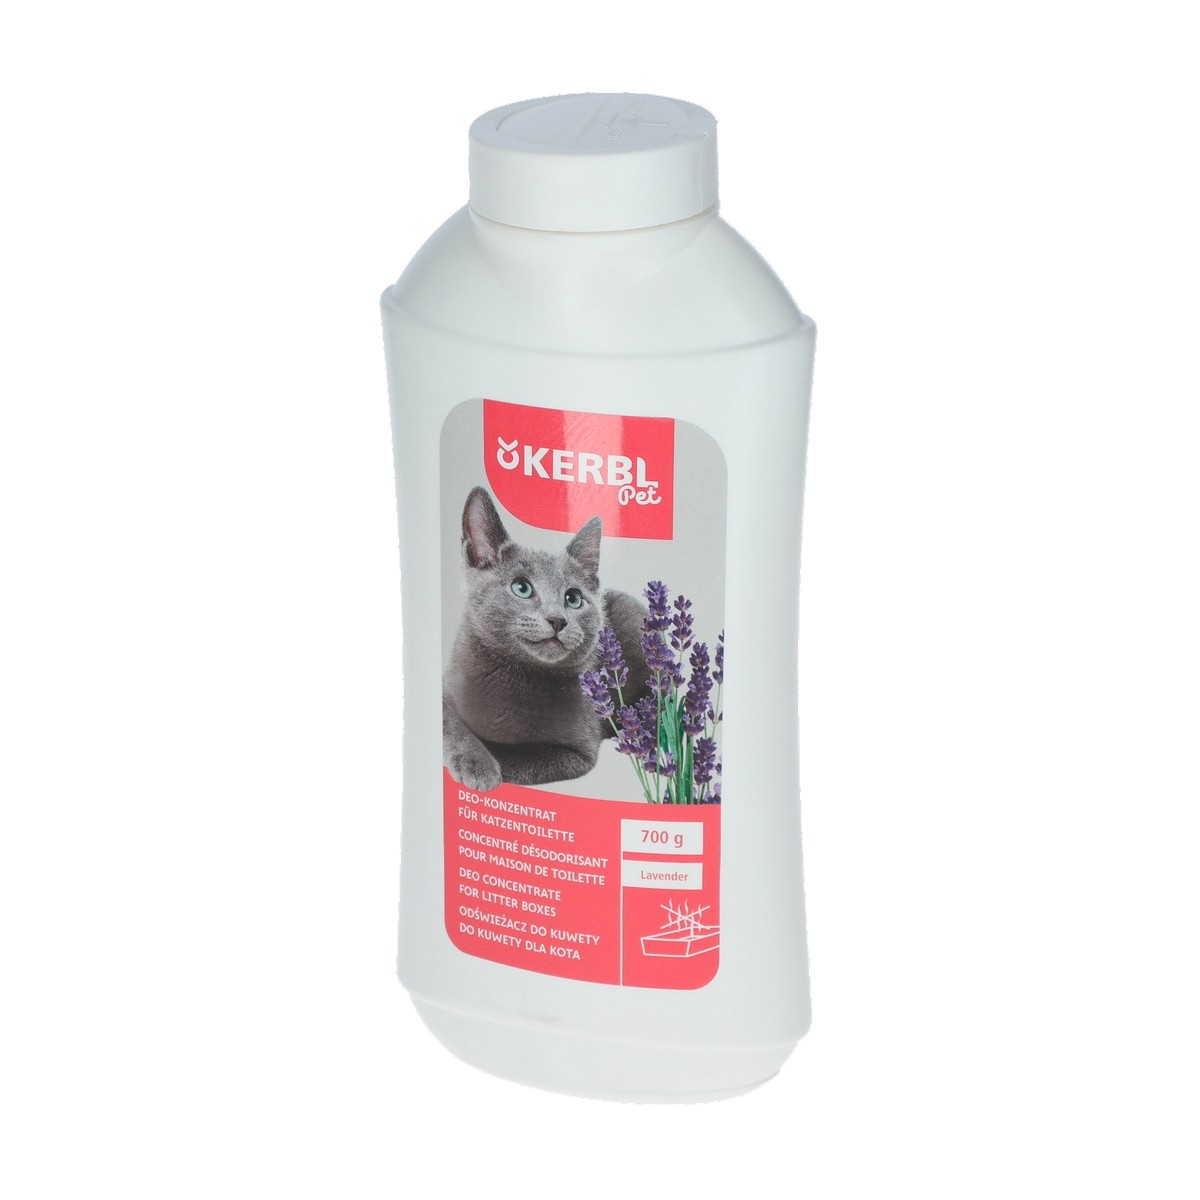 Spray d'herbe à chat pour chatons, spray d'herbe à chat, naturel pur,  organique, jouets